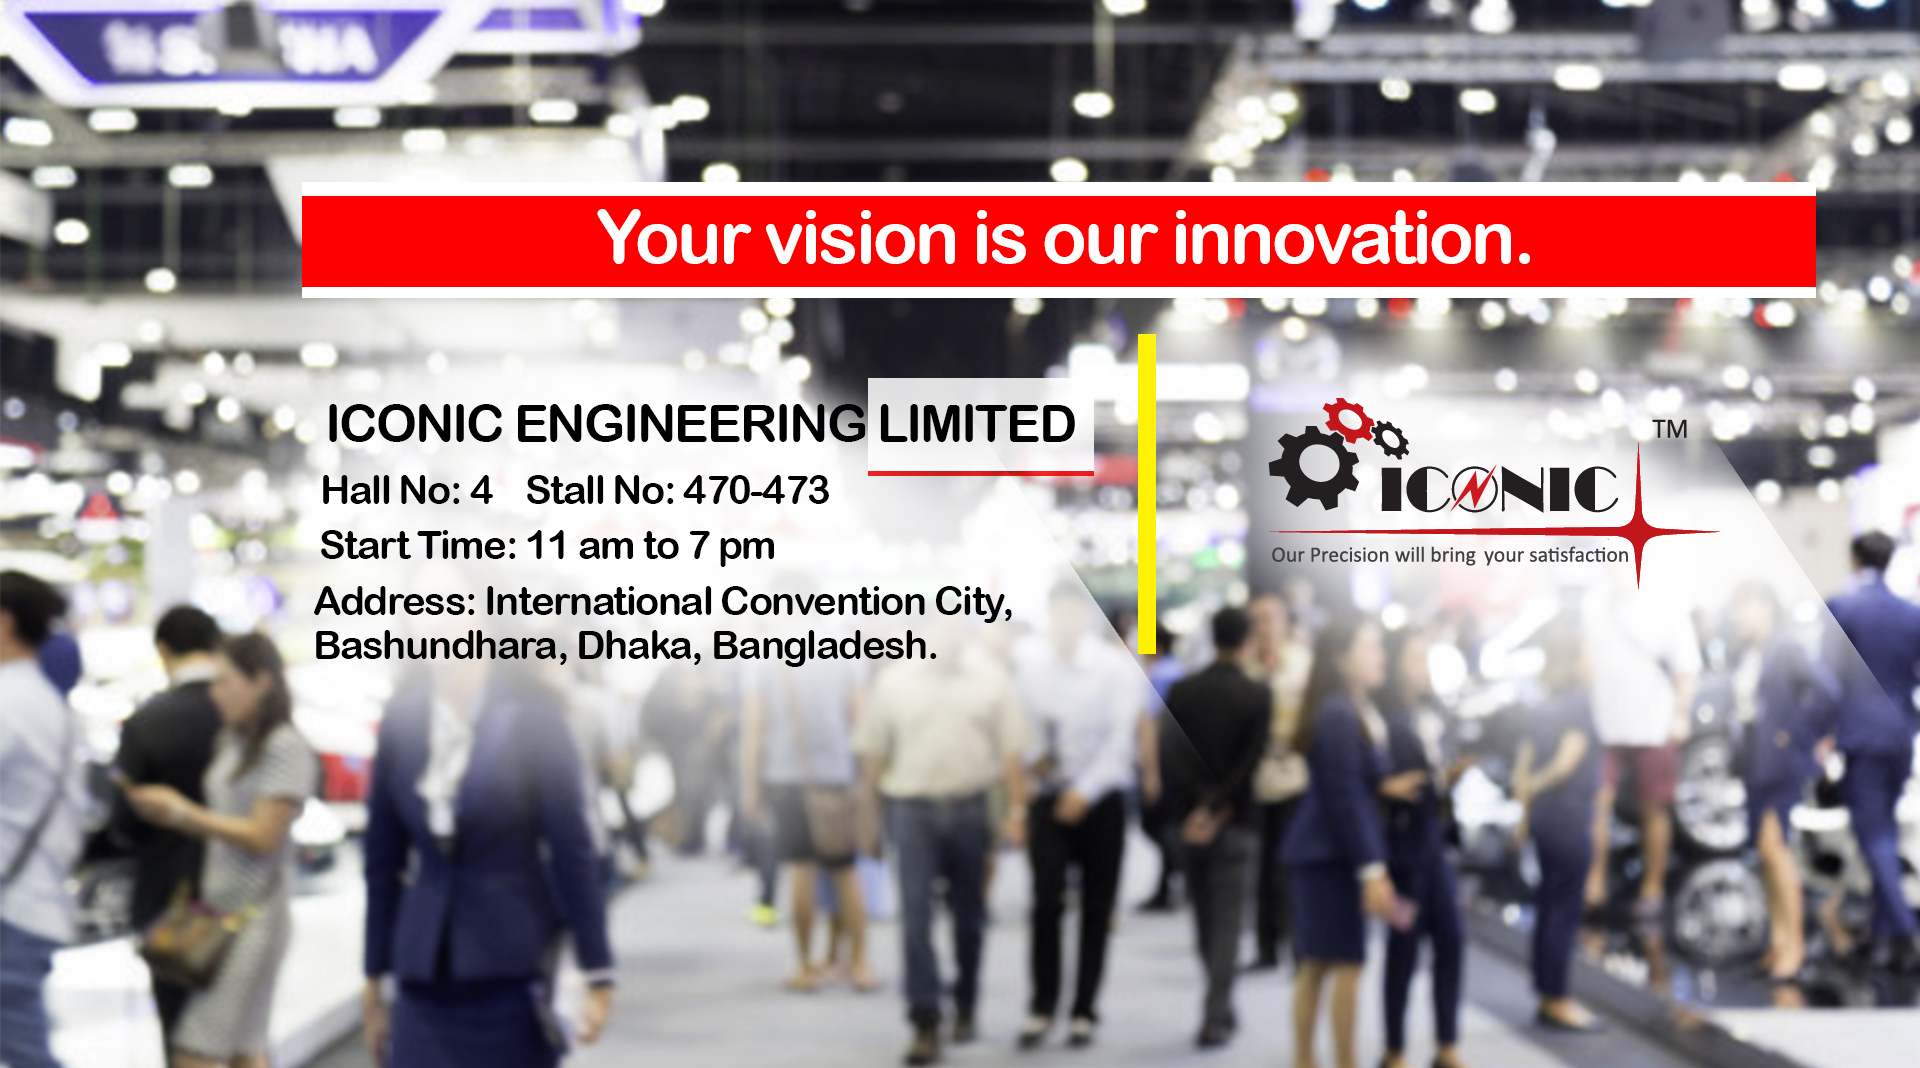 Garmentech Bangladesh 2020 - Iconic Engineering Limited